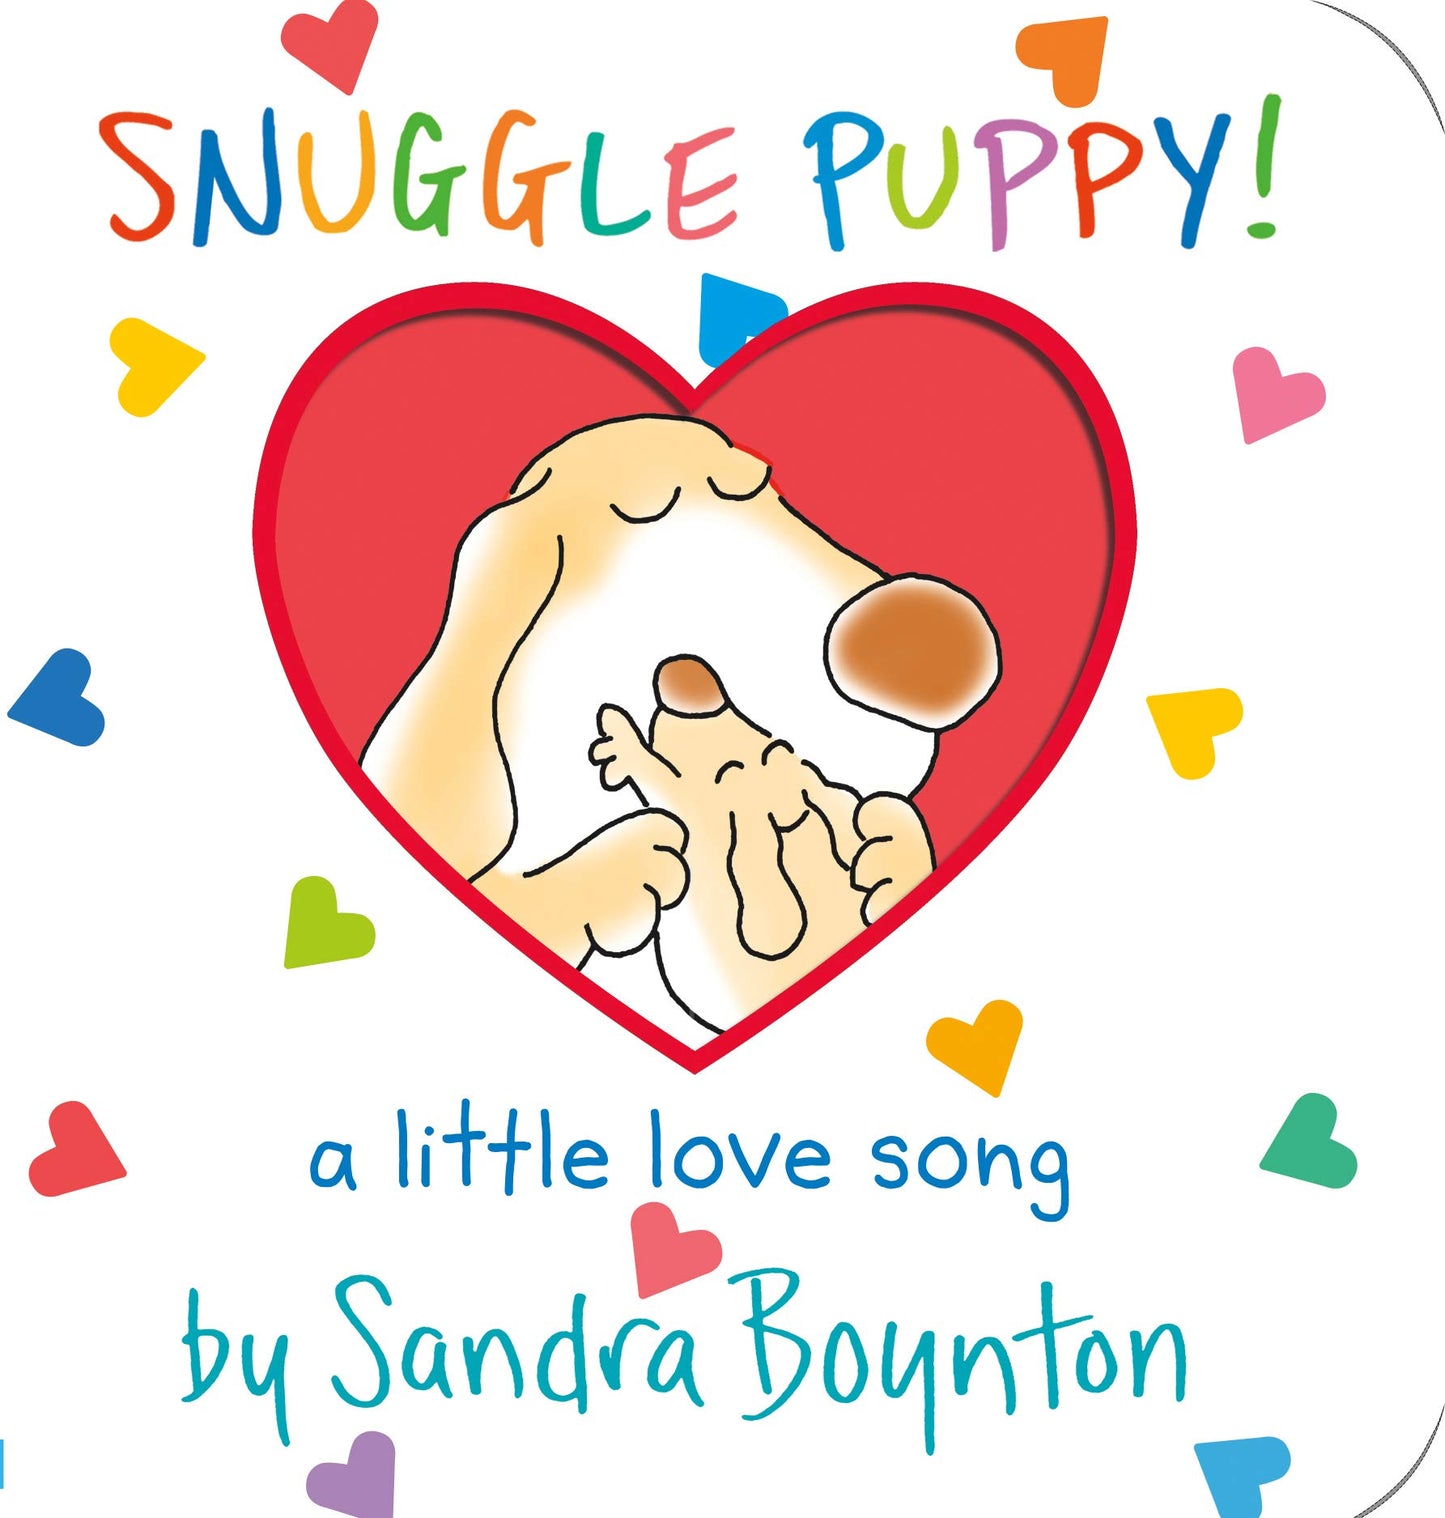 Snuggle Puppy! Board Book by Sandra Boynton